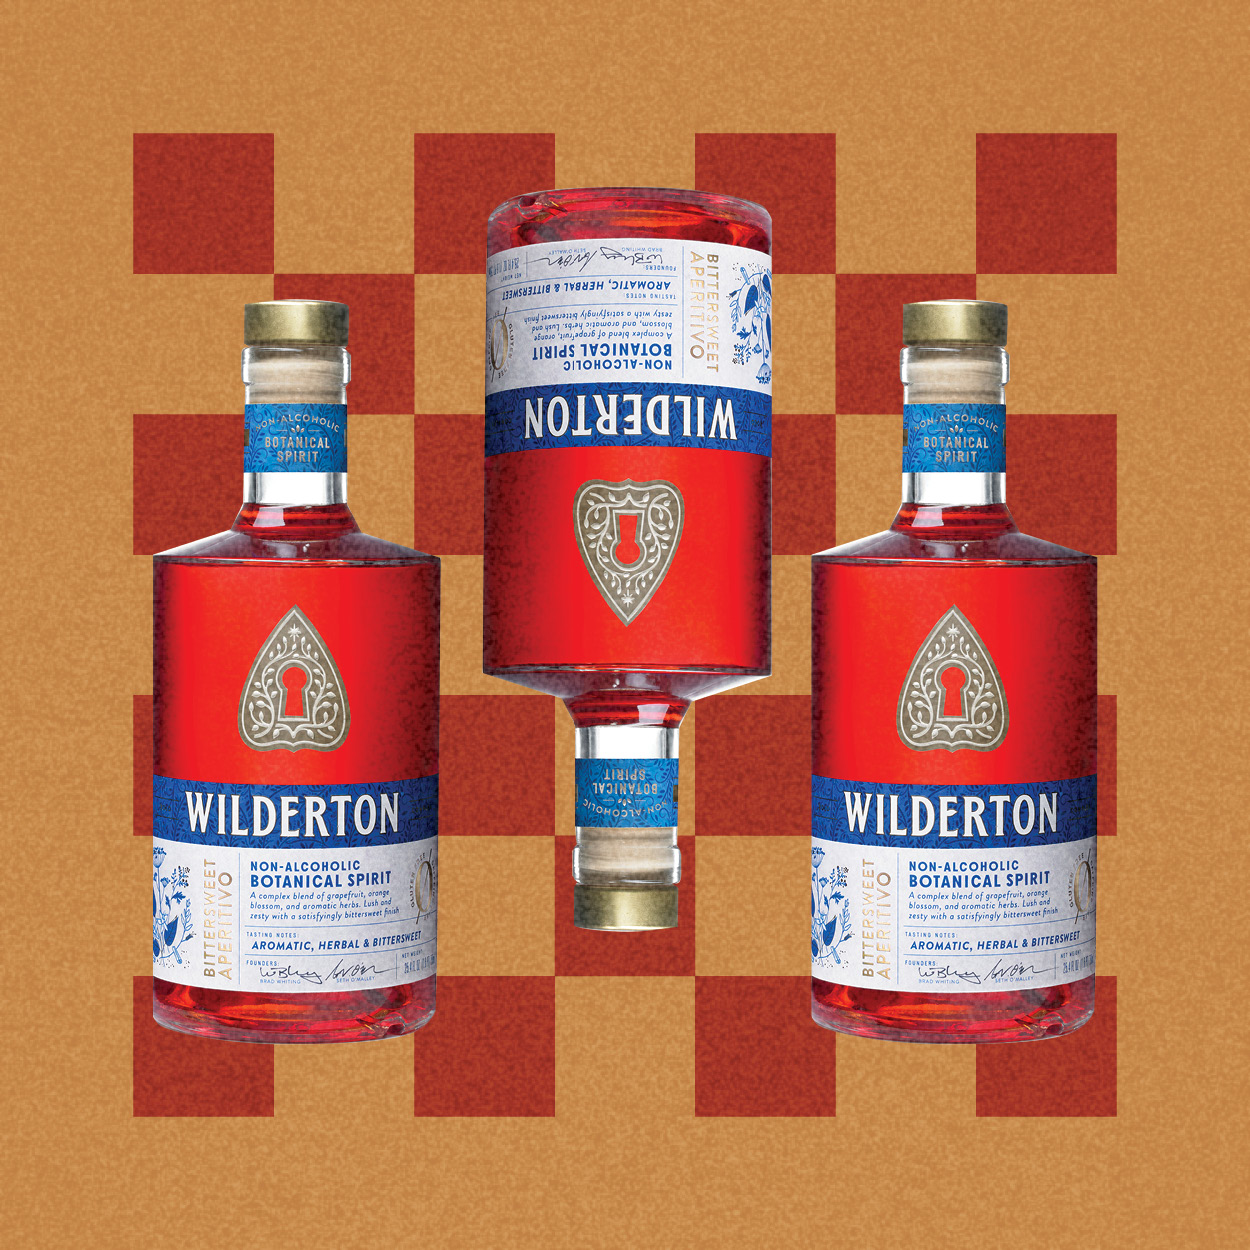 Wilderton aperitivo bottles